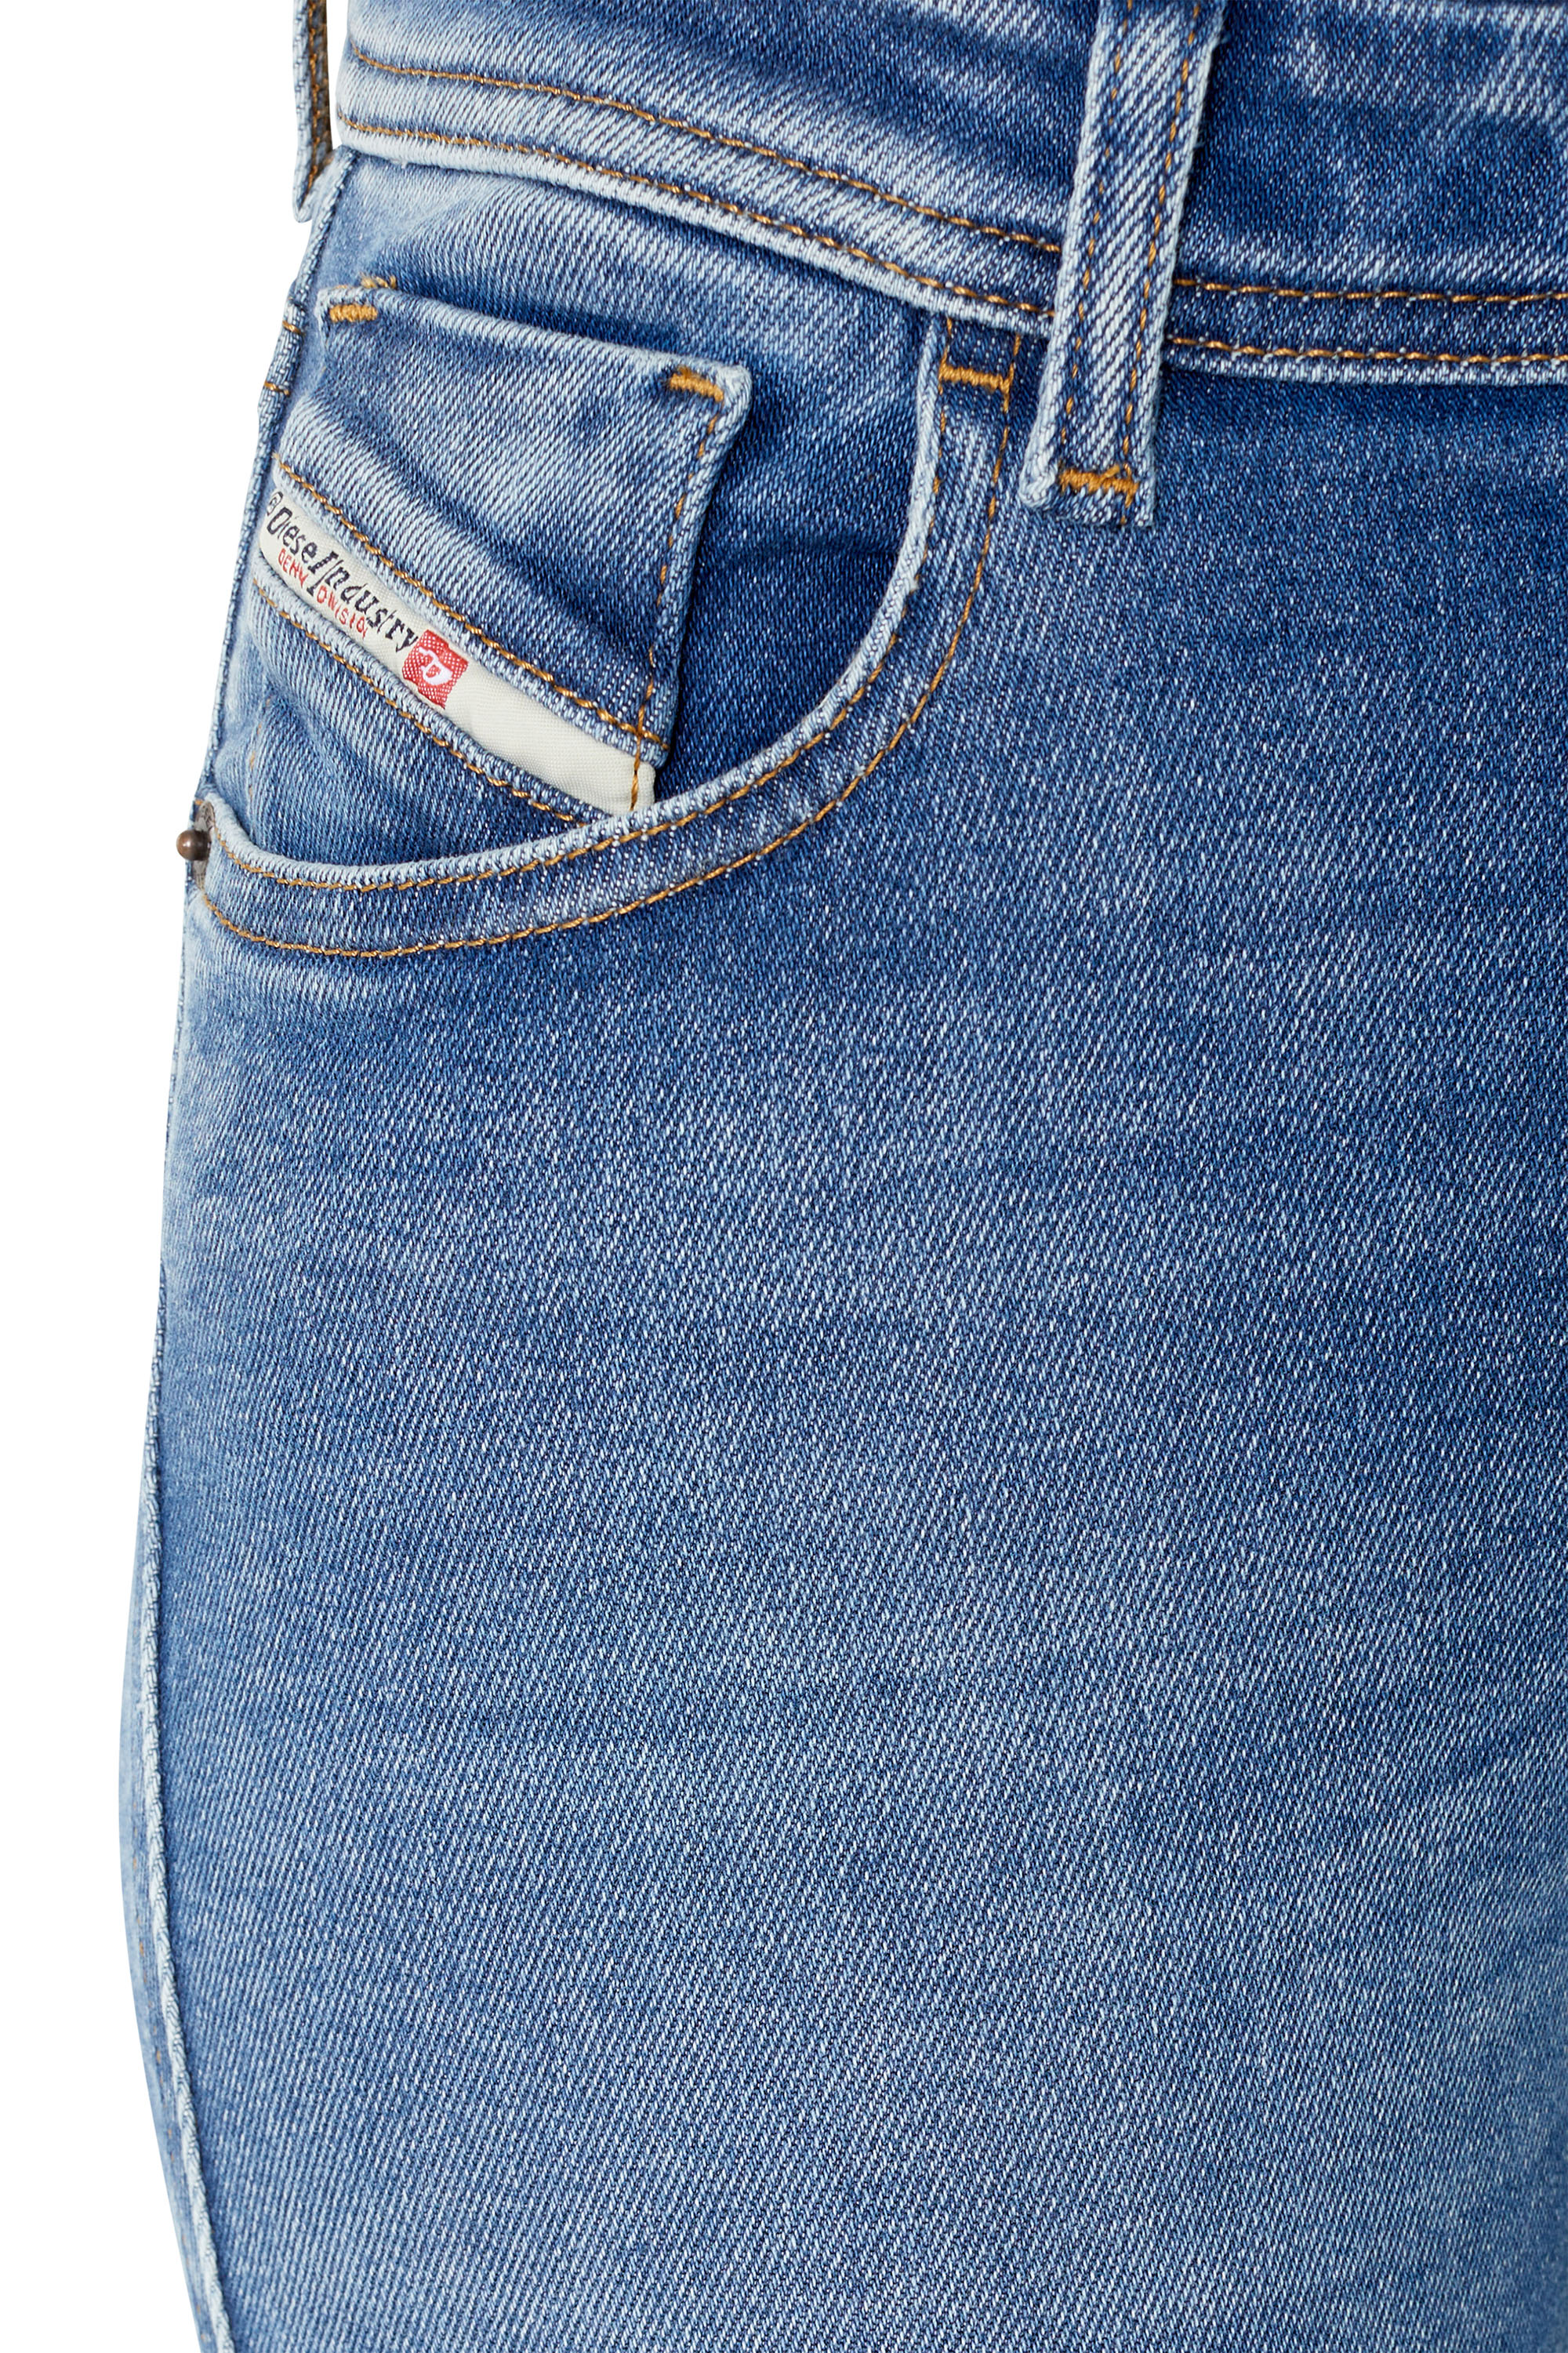 Women's Super Skinny Jeans | Shop on Diesel.com